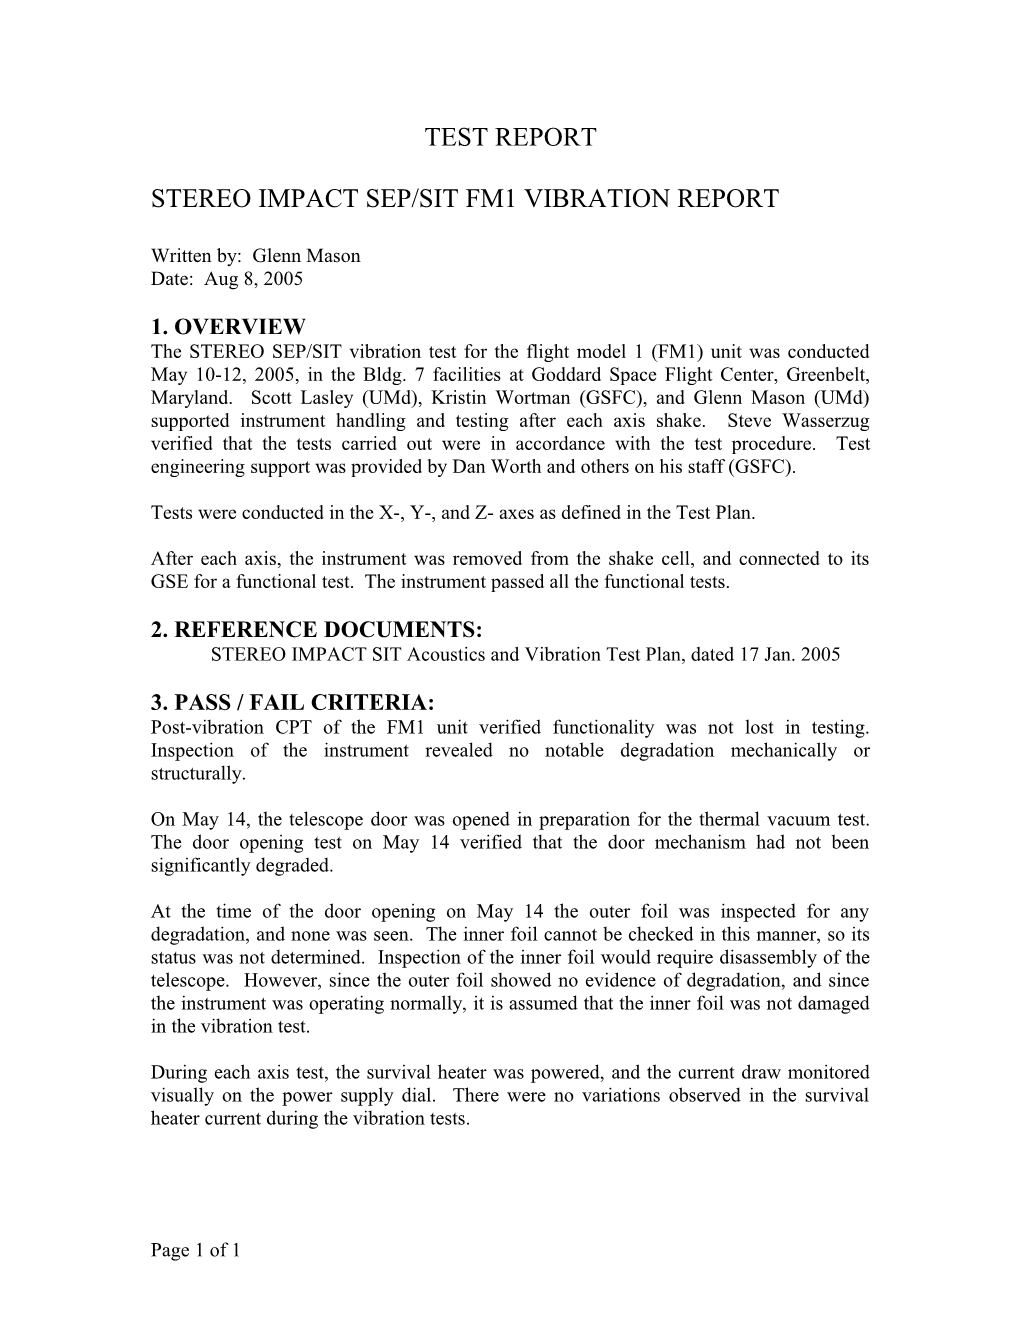 Stereo Impact Sep/Sit Fm1 Vibration Report